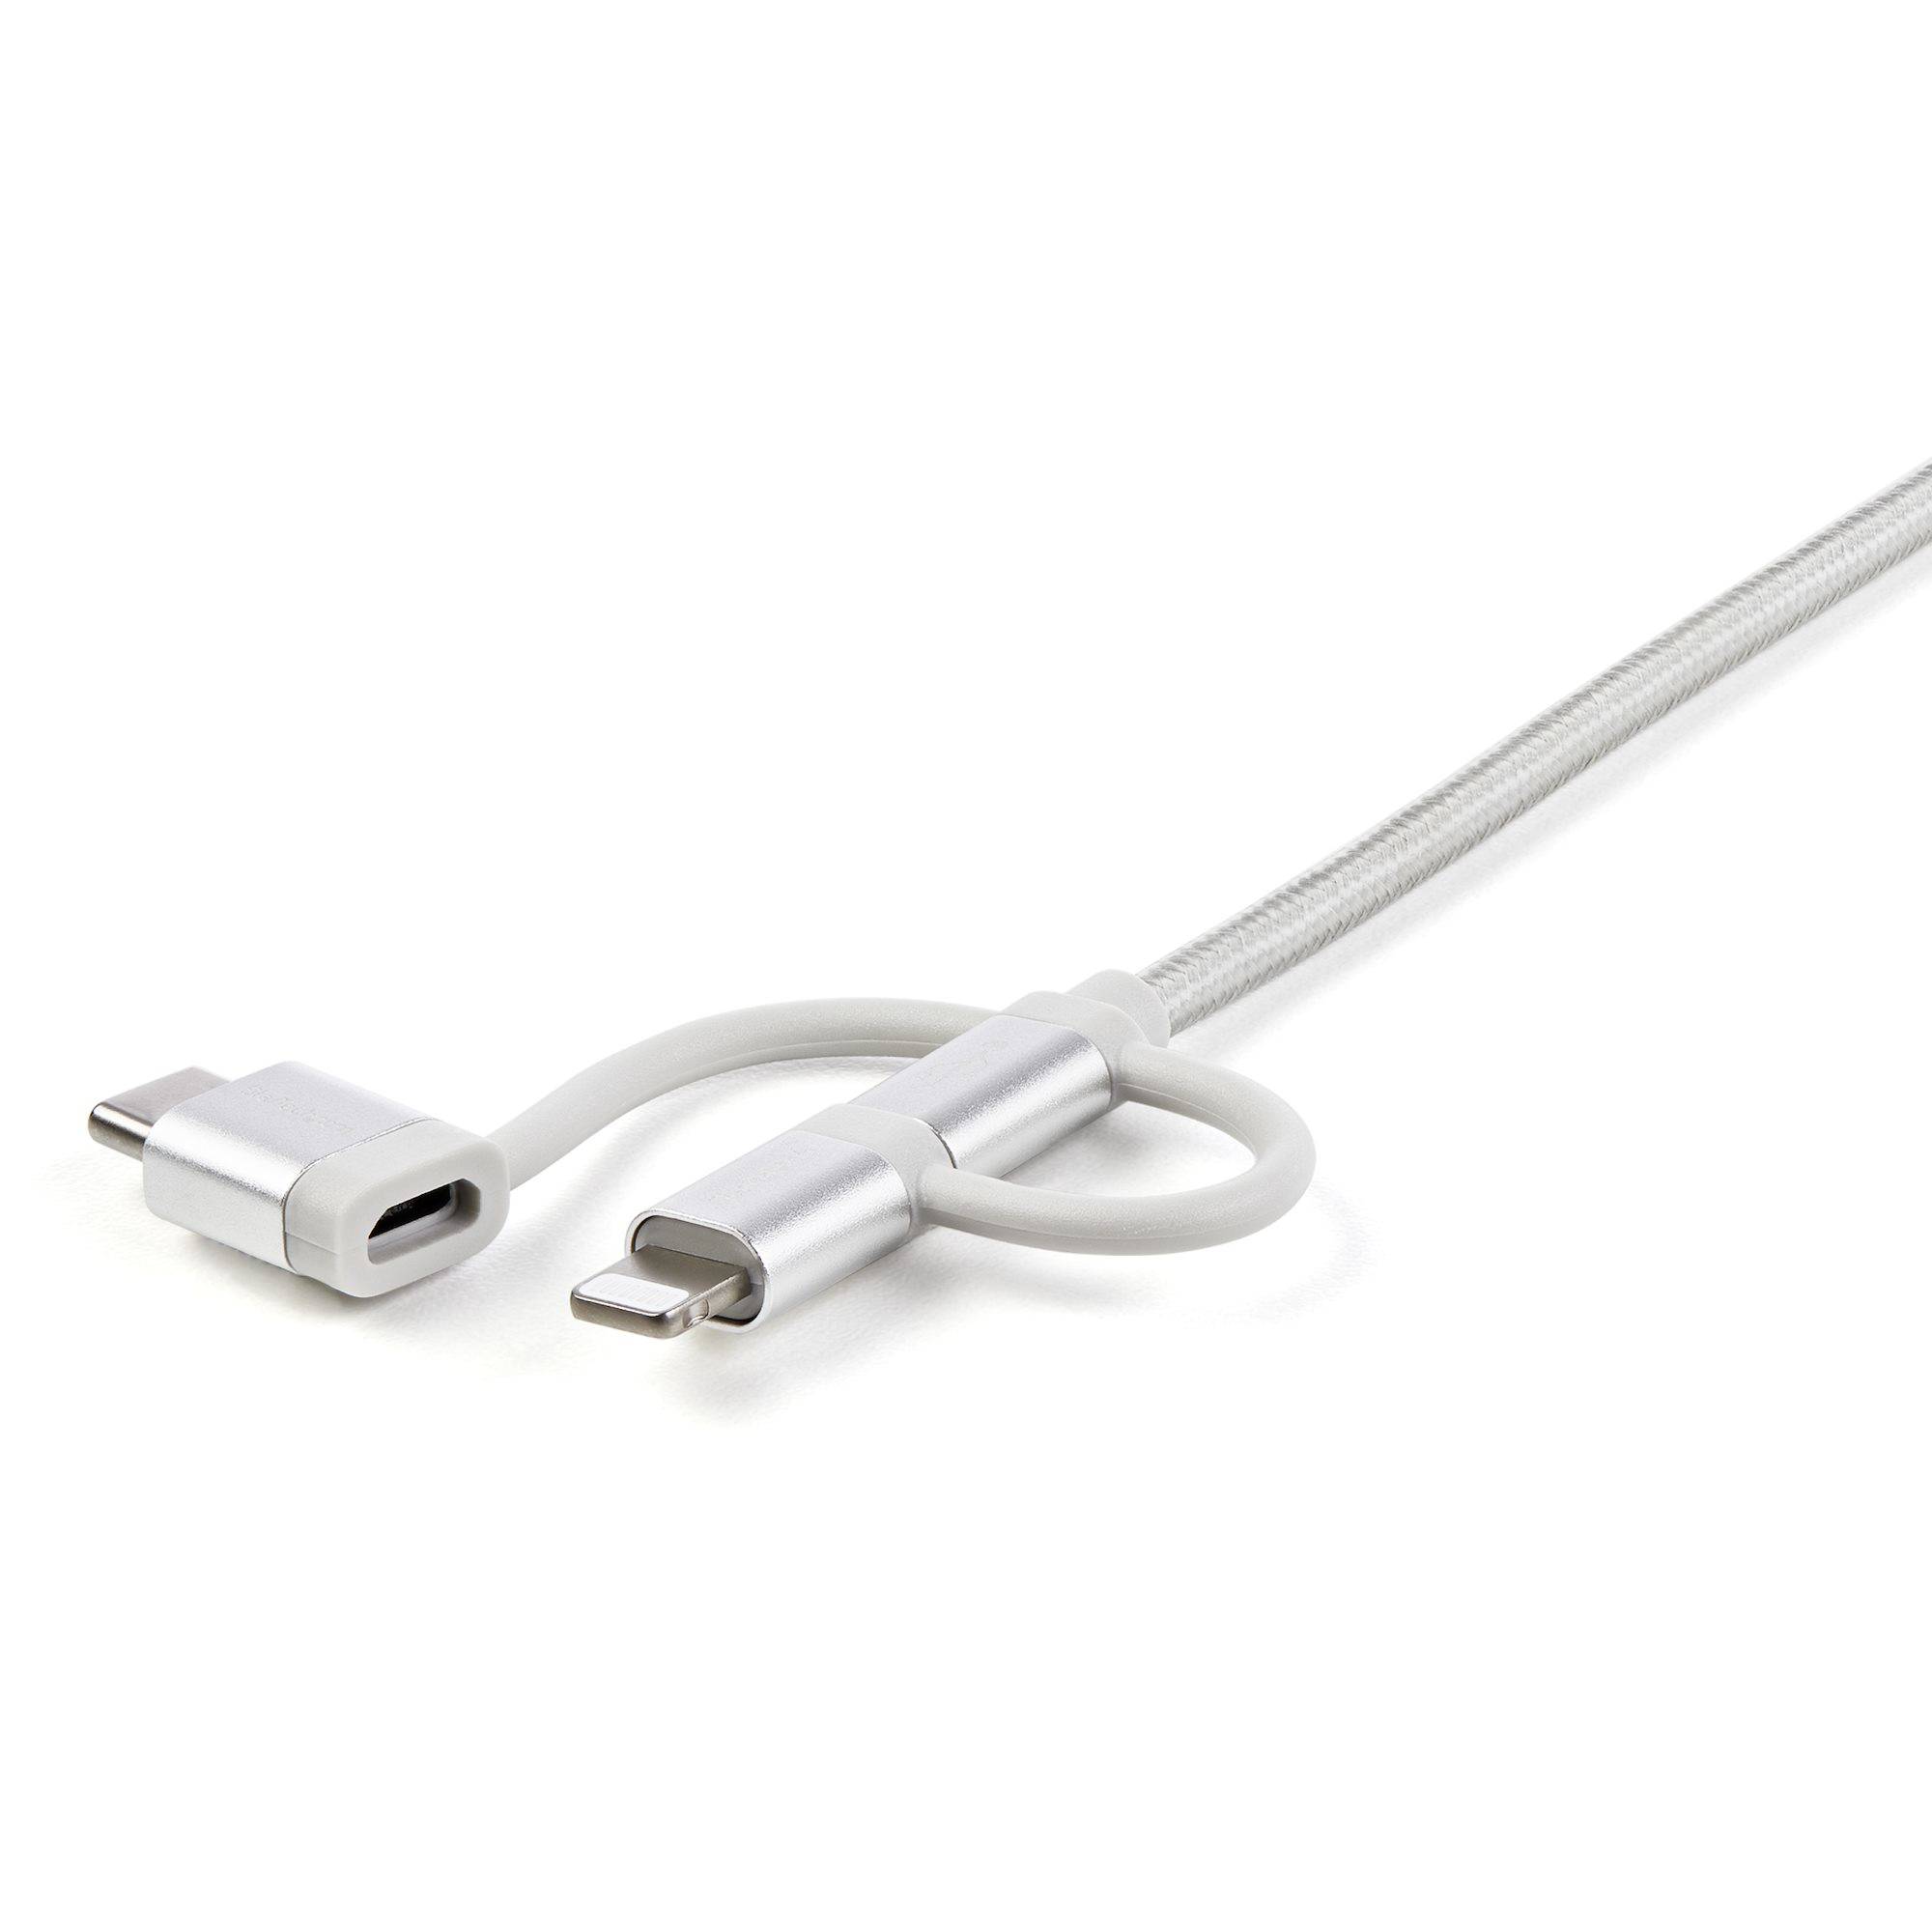 StarTech.com Cavo di ricarica multiplo USB da 1m - Adattatore da USB a  Micro-USB o USB-C o Lightning per iPhone / iPad / iPod / Android -  Certificato